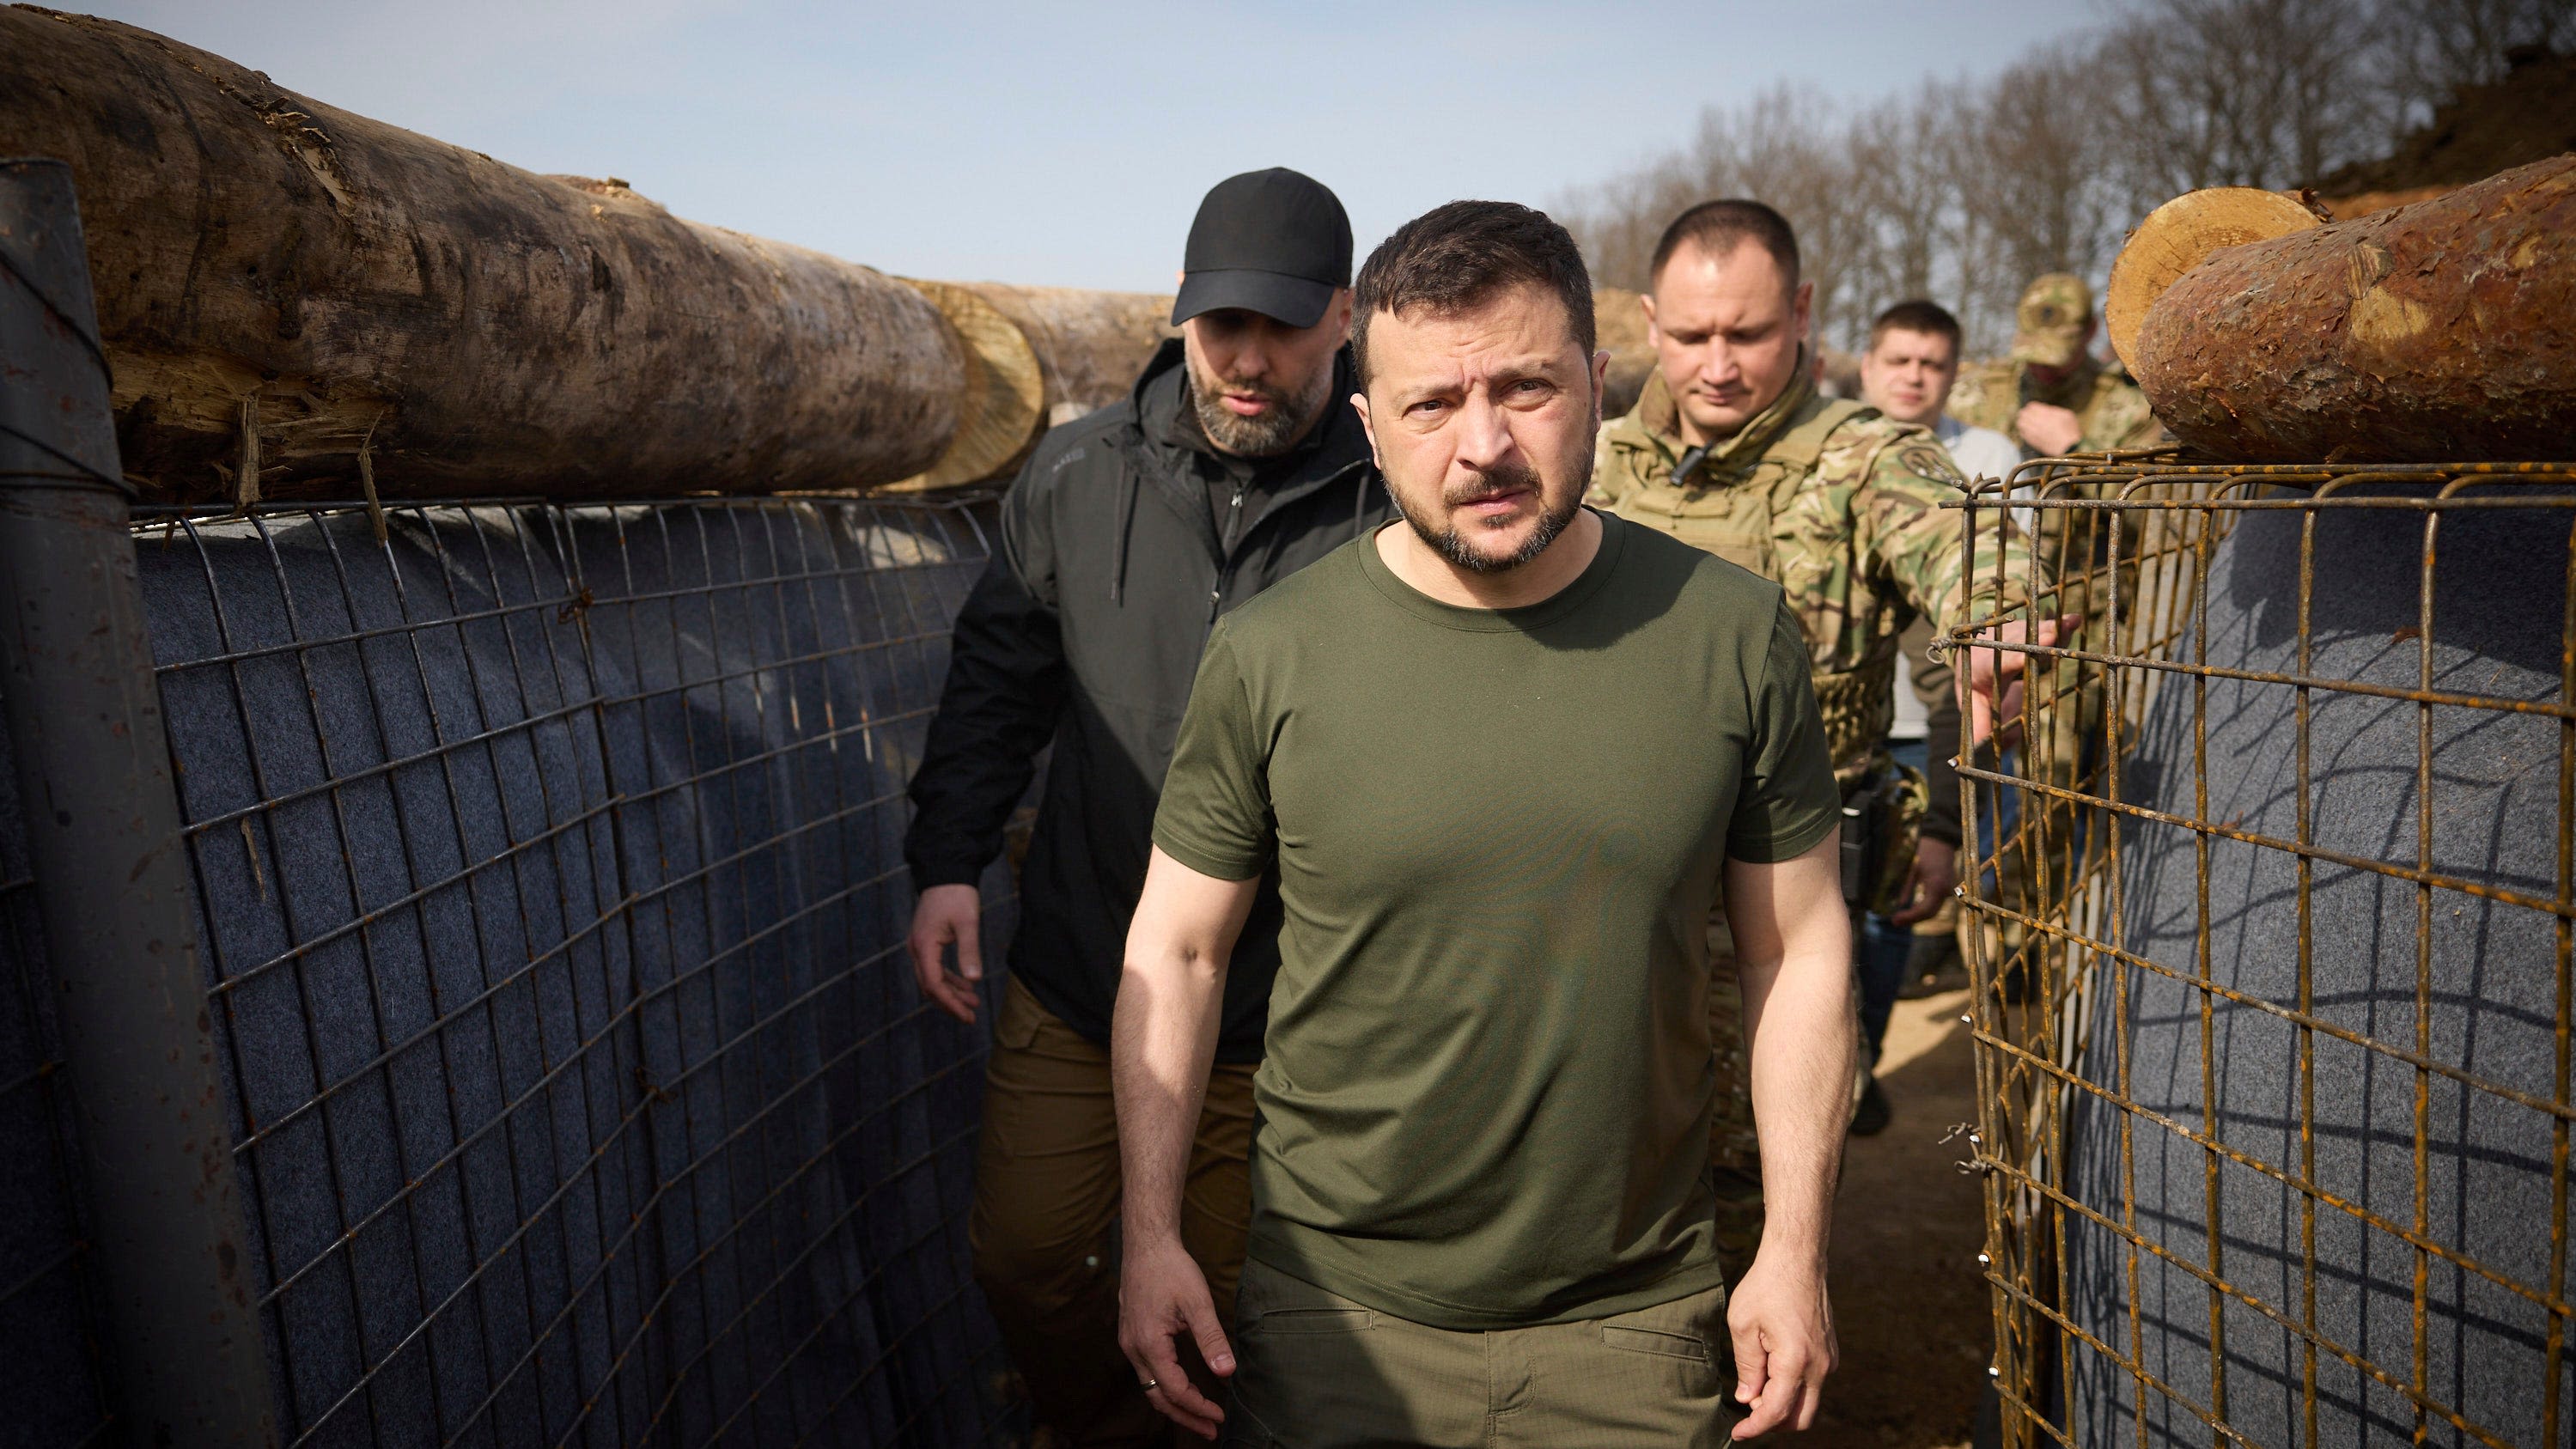 Zelenskyy says Ukraine has taken back control in areas of the embattled Kharkiv region